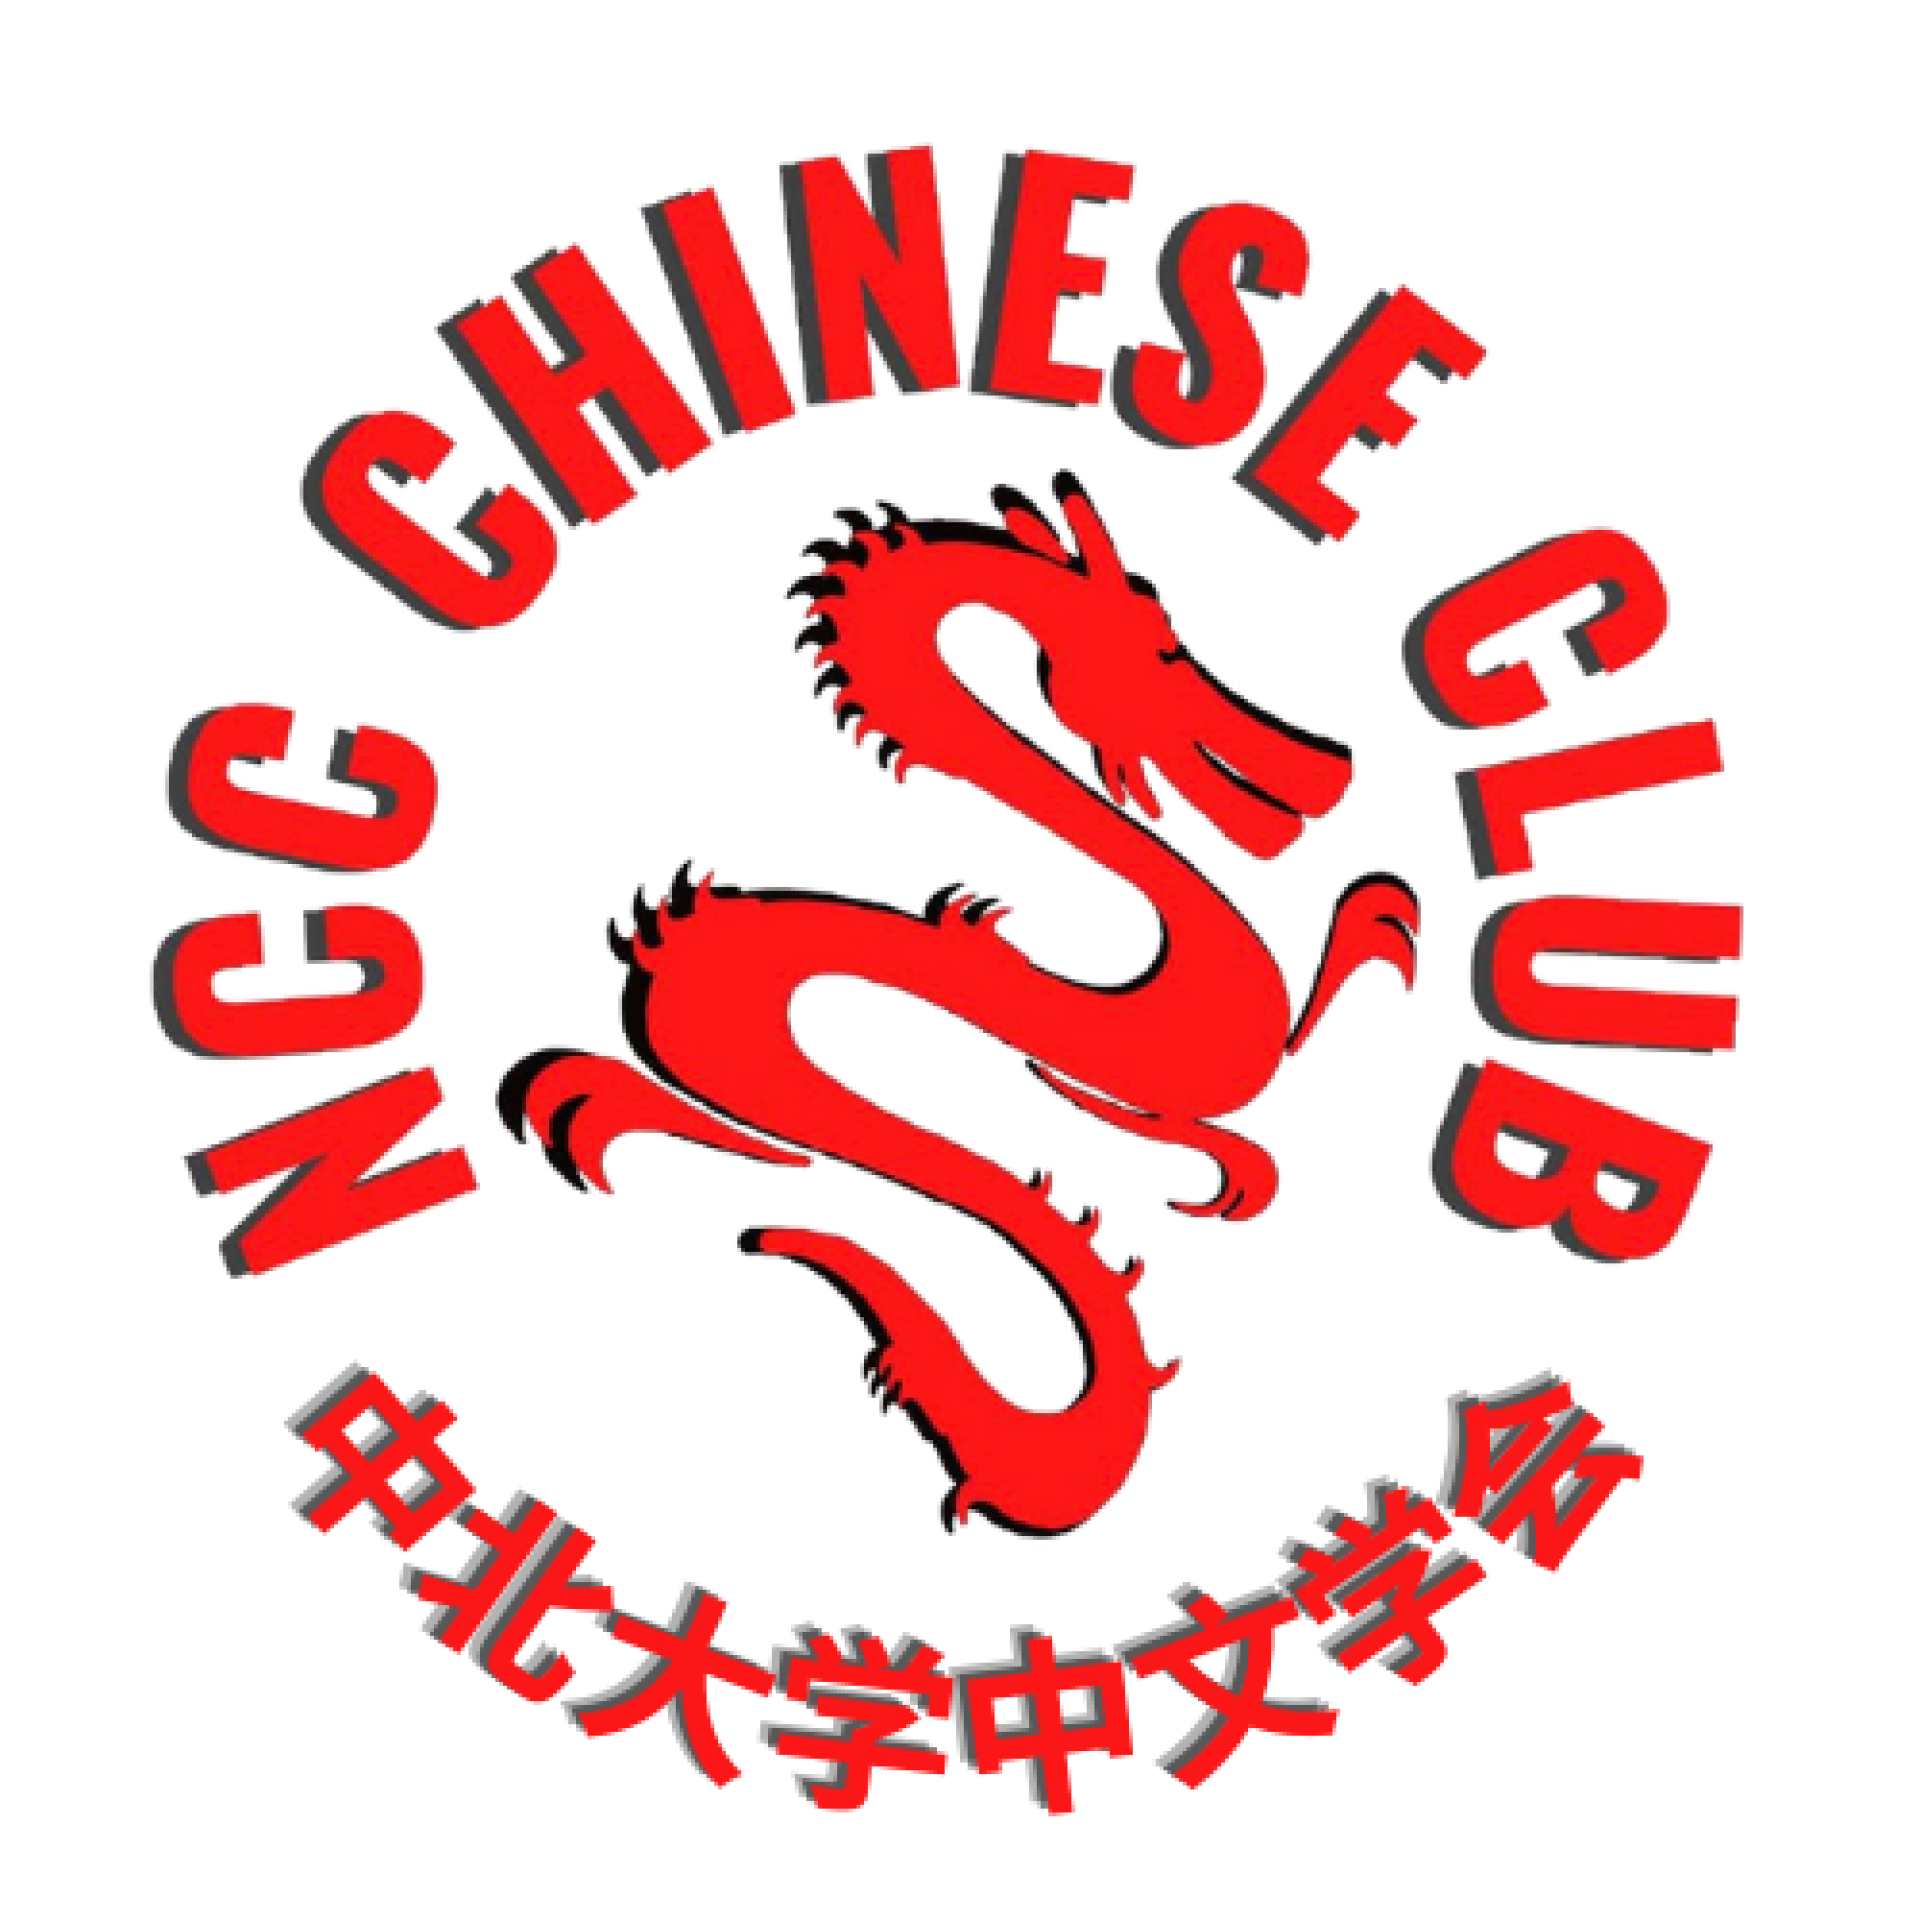 Chinese Club Logo